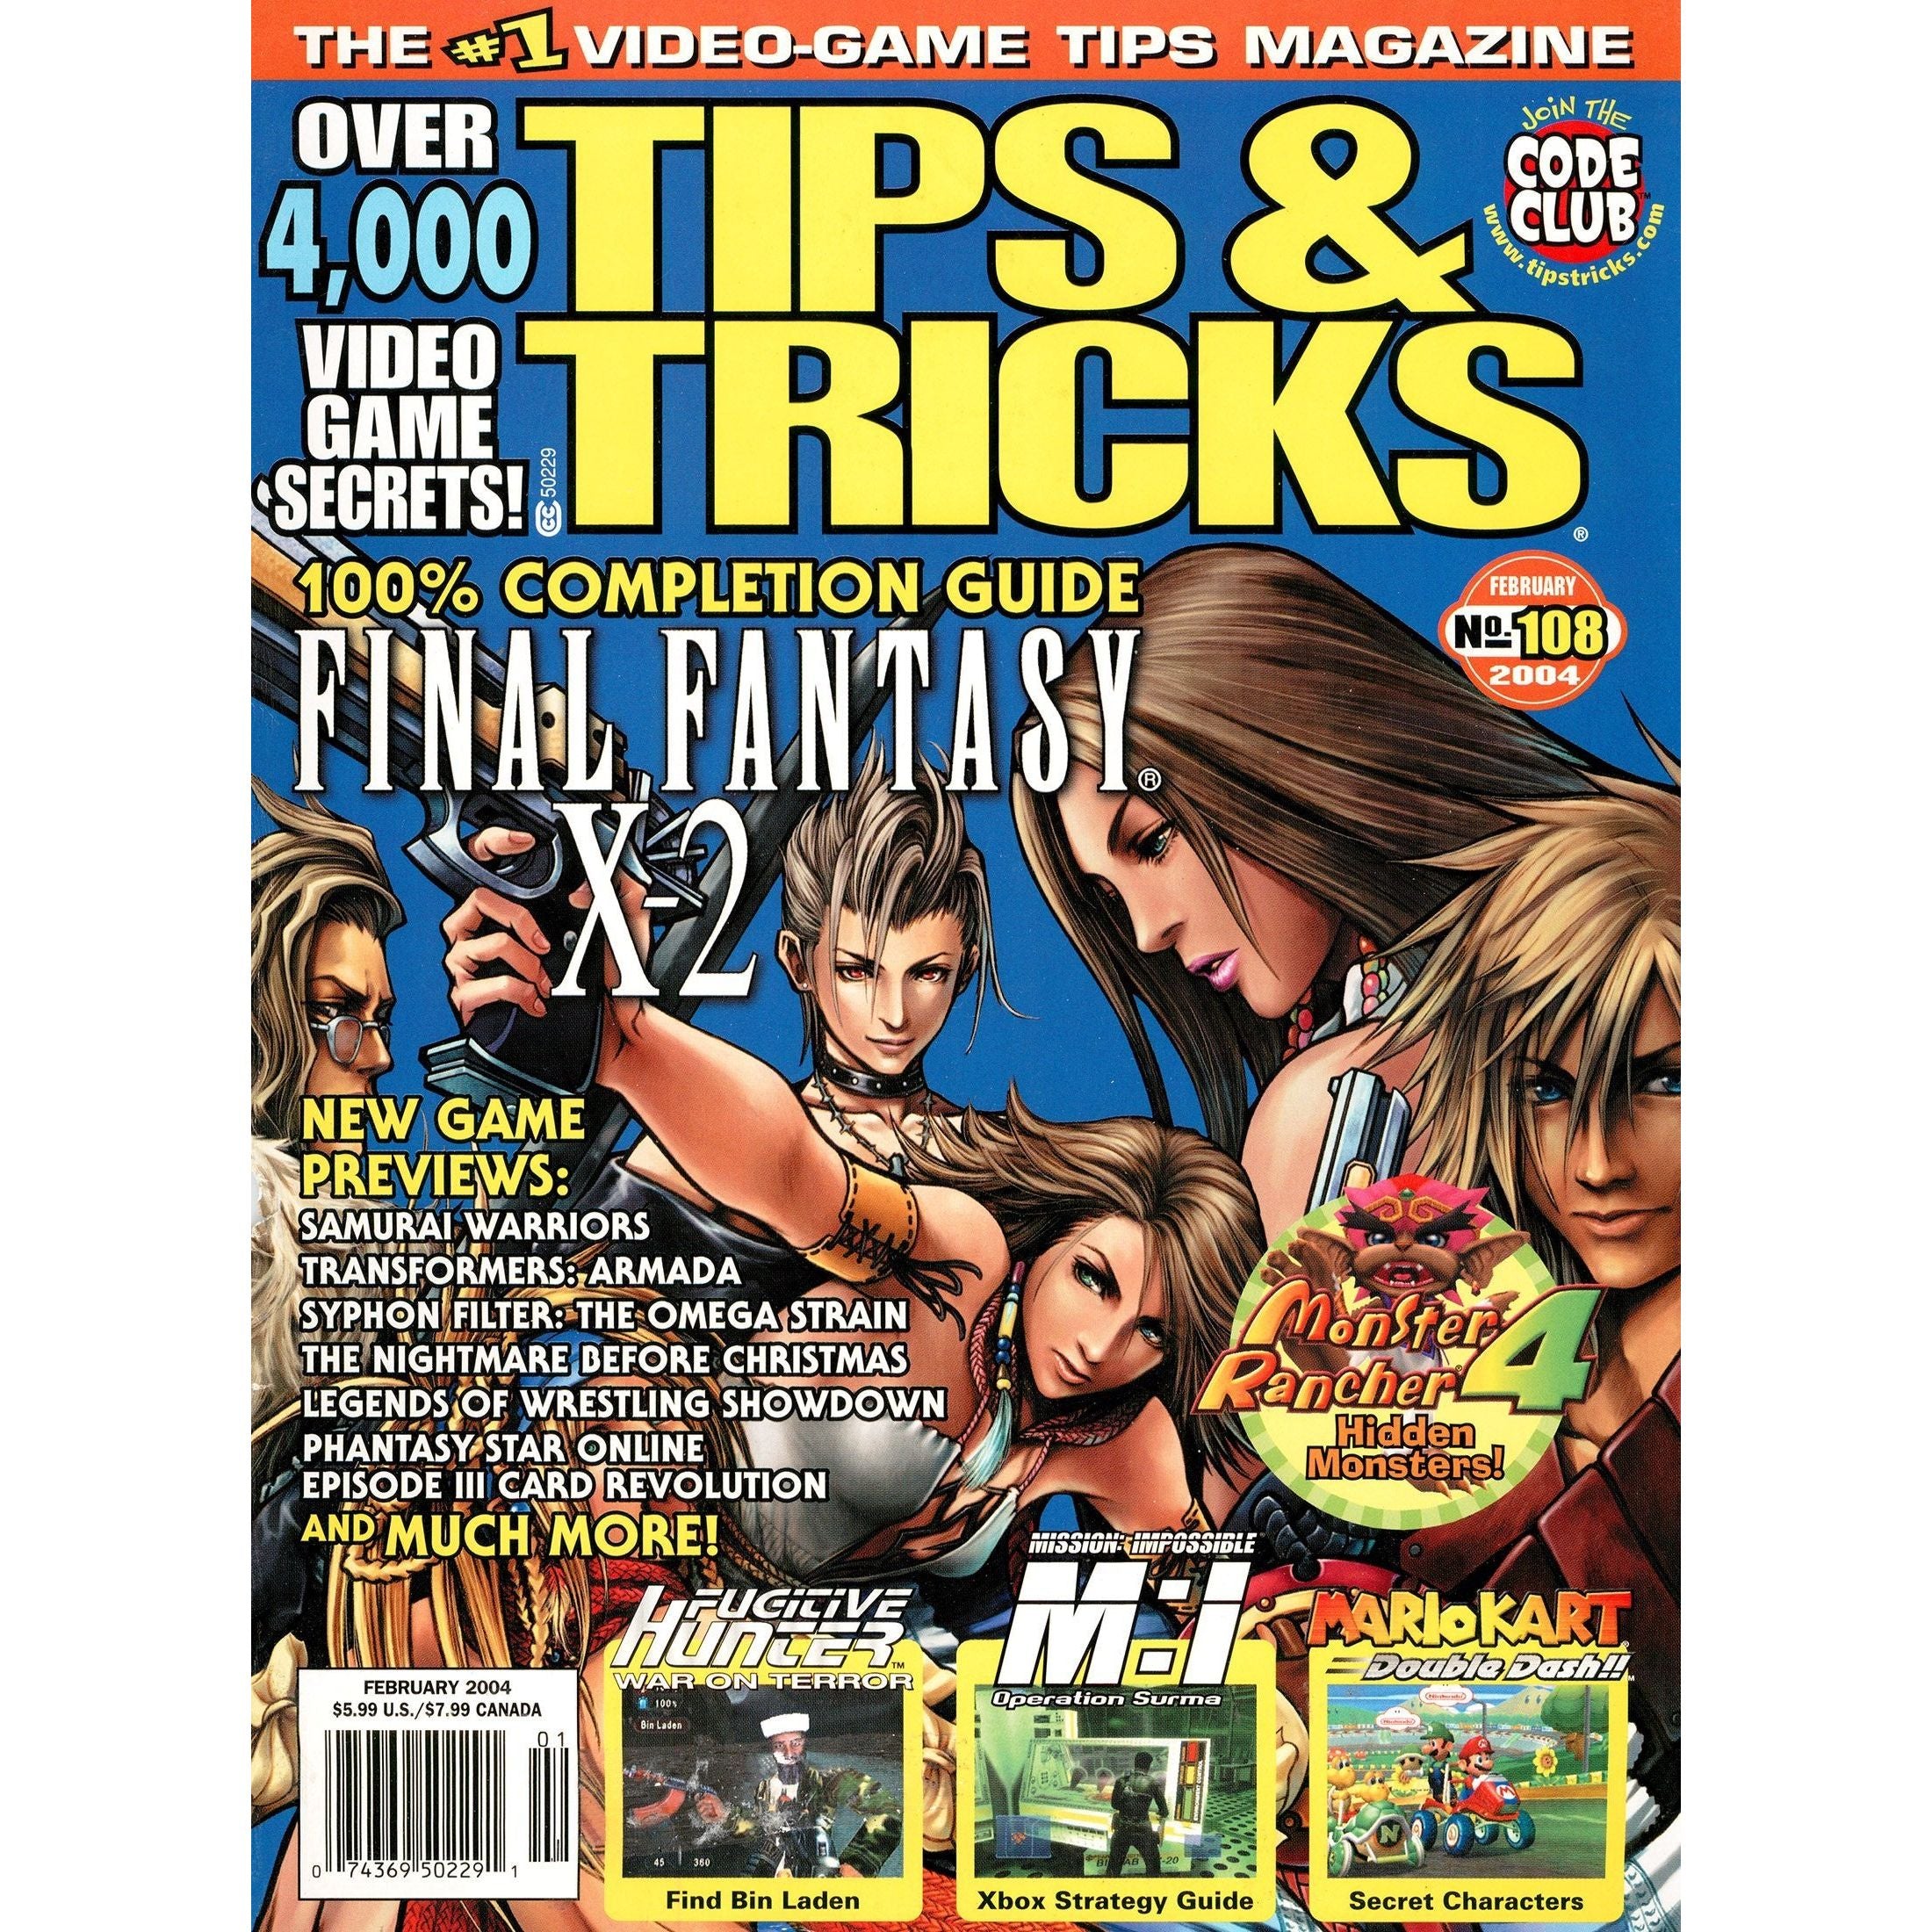 Tips & Tricks Magazine - February 2004